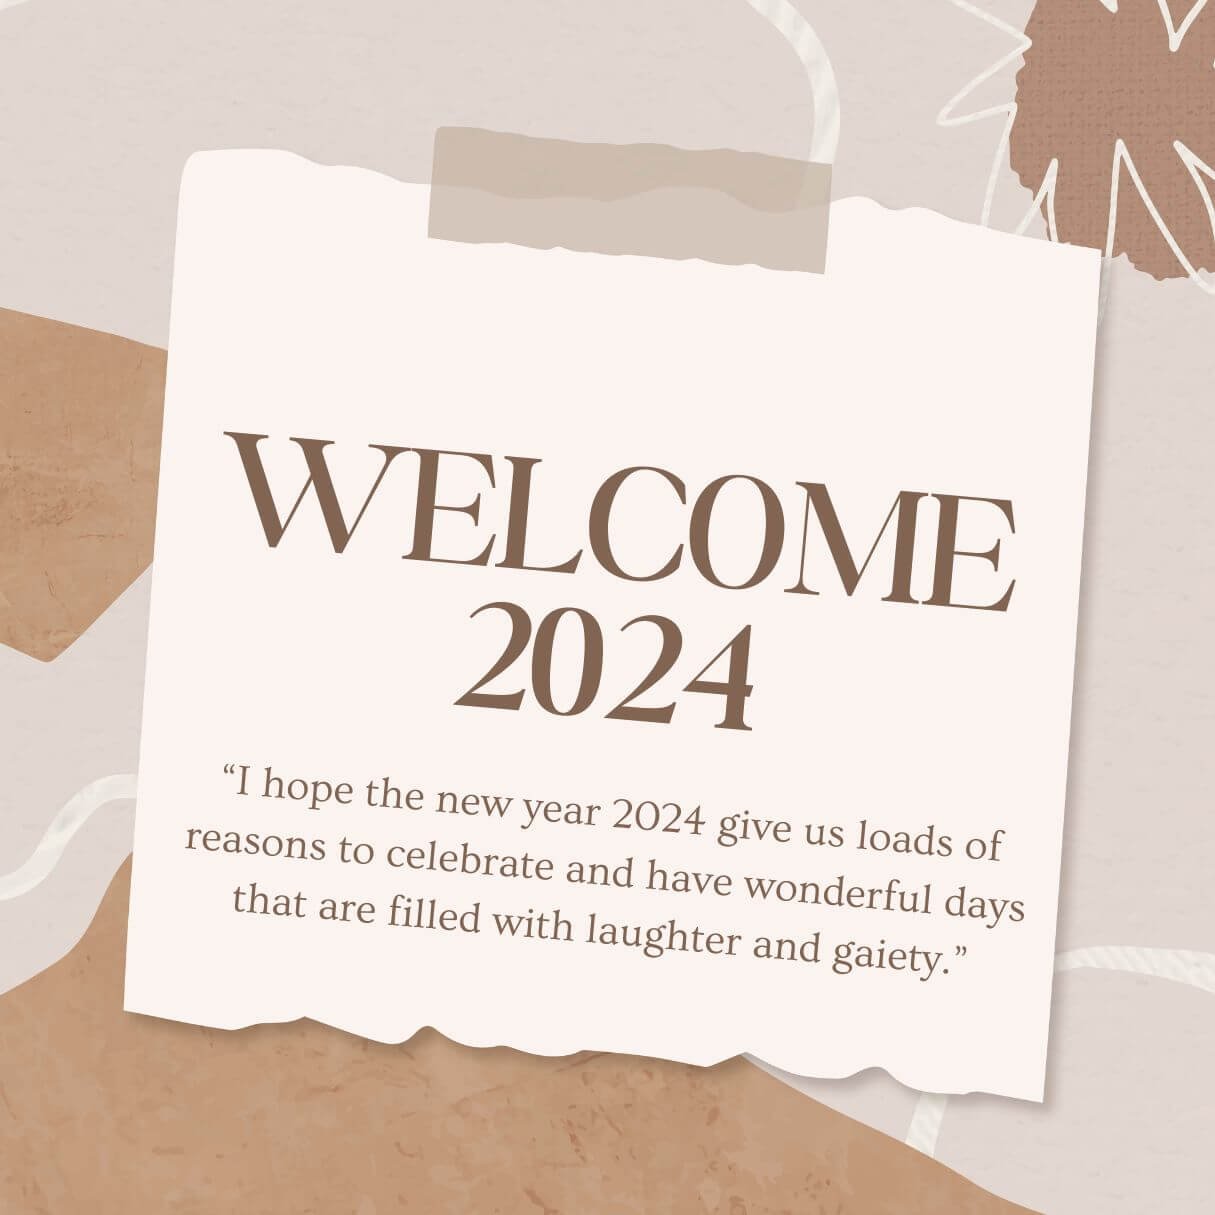 Welcome 2024 Hd Image